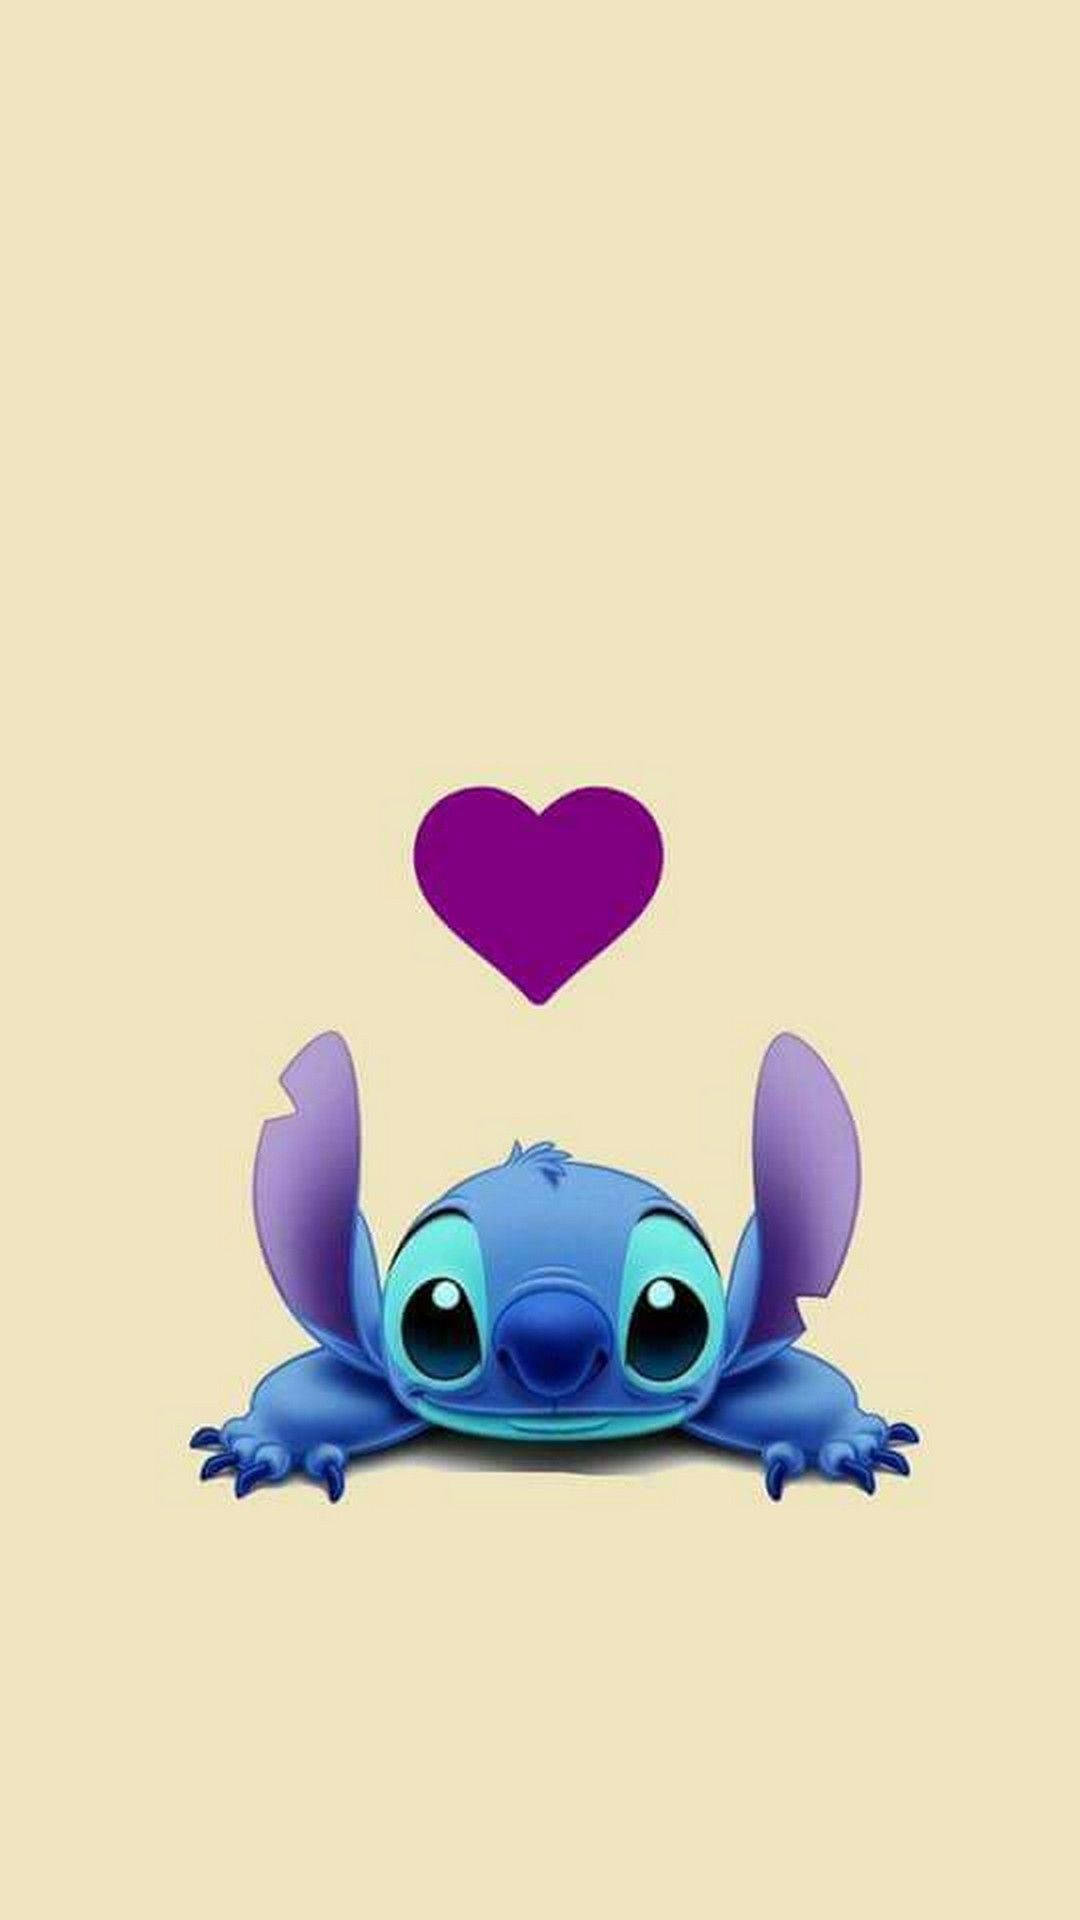 Cute Stitch IPhone Violet Heart Wallpaper